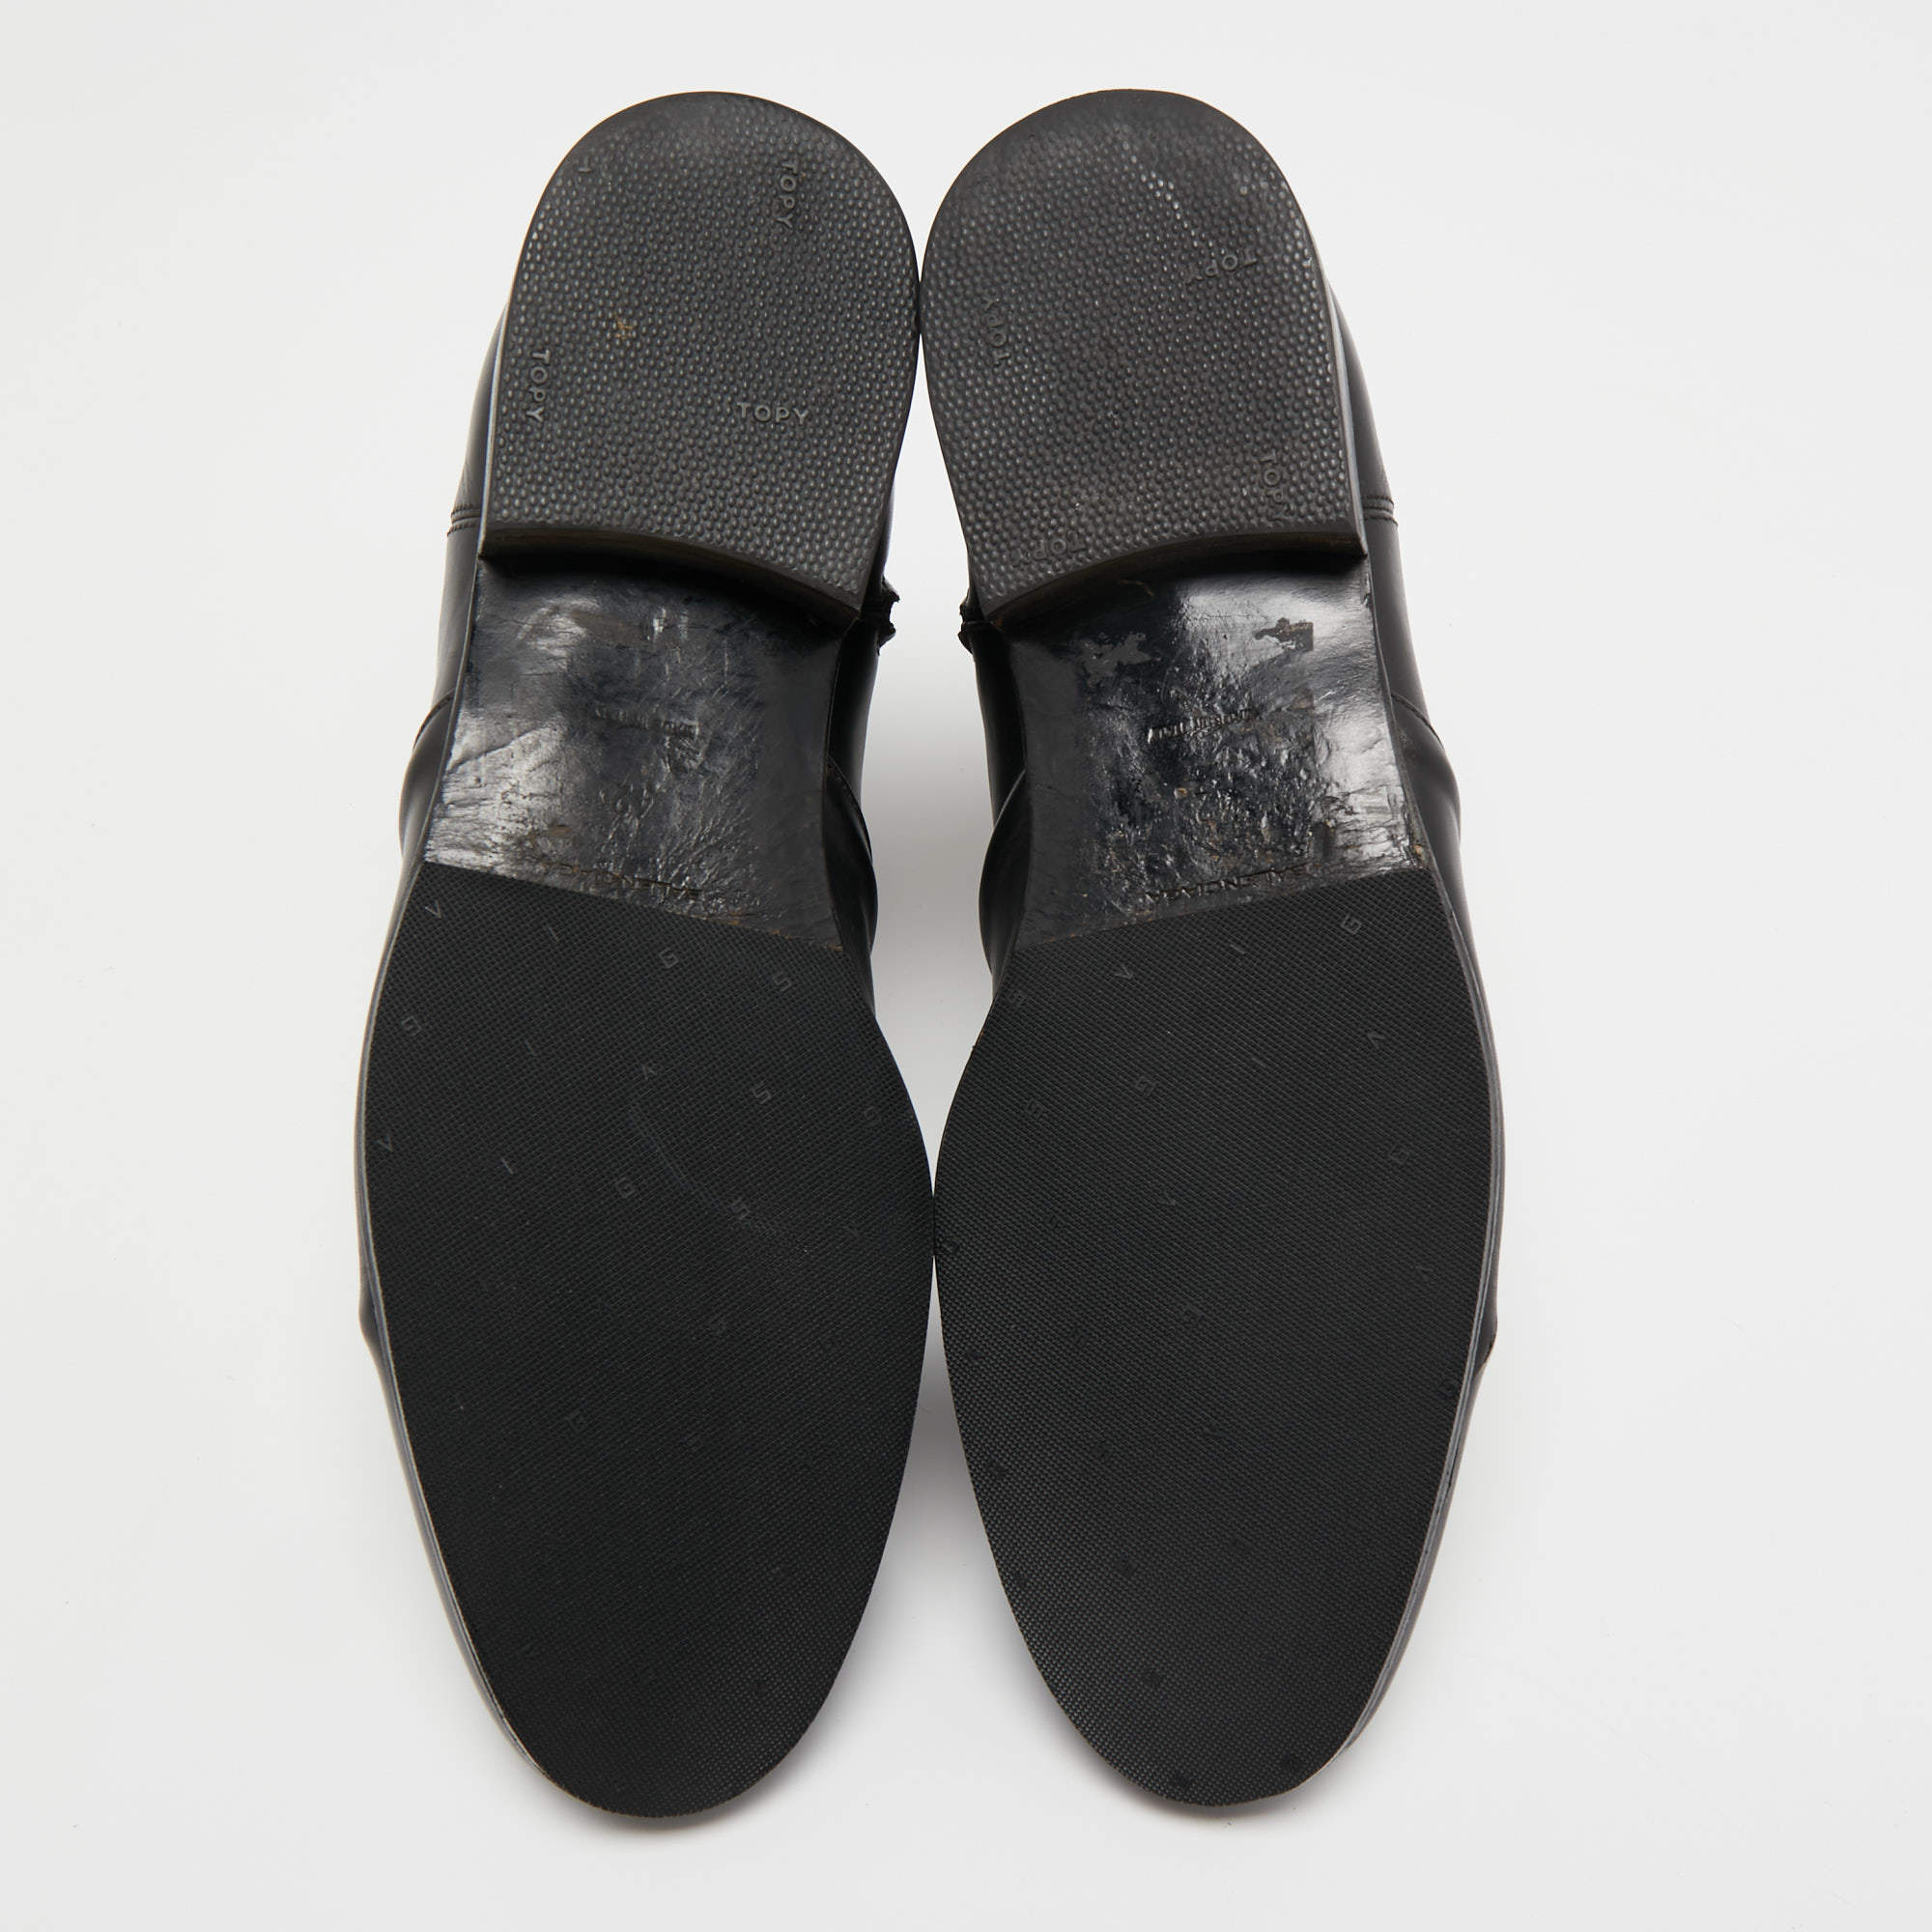 Leather boots Balenciaga Black size 42 EU in Leather - 37160861